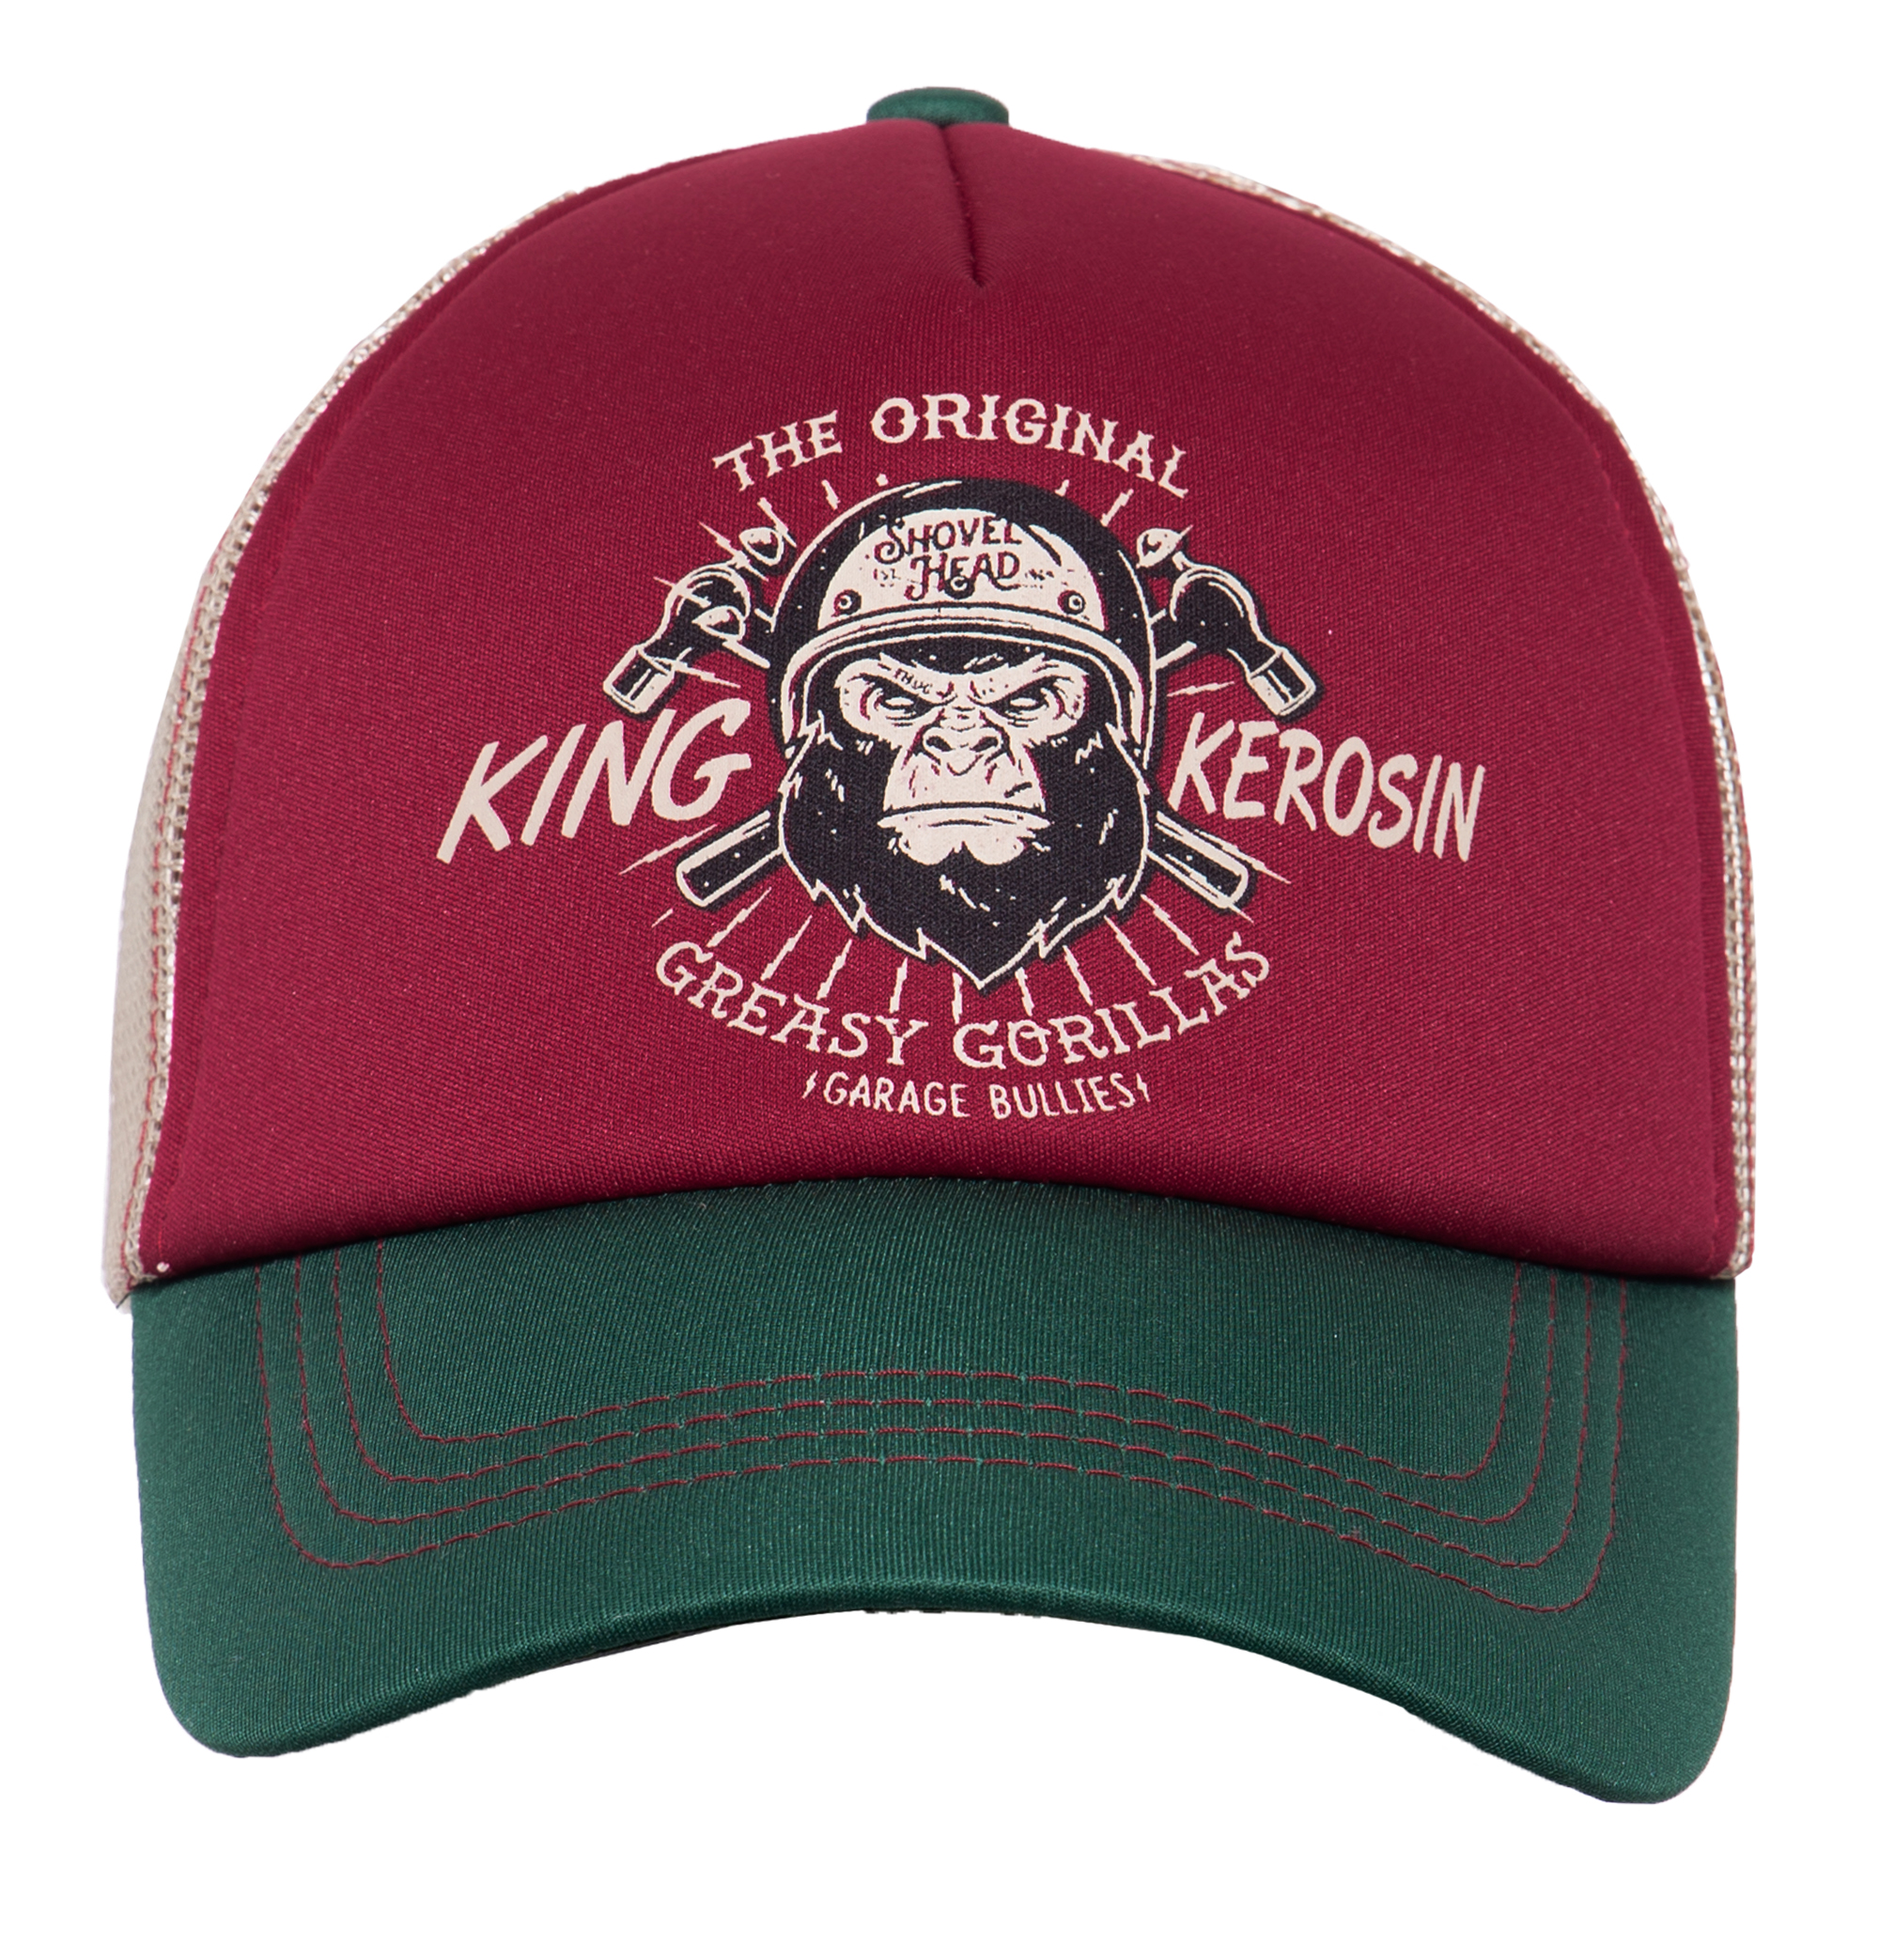 King Kerosin Trucker Cap mit Netzeinsatz - Greasy Gorillas